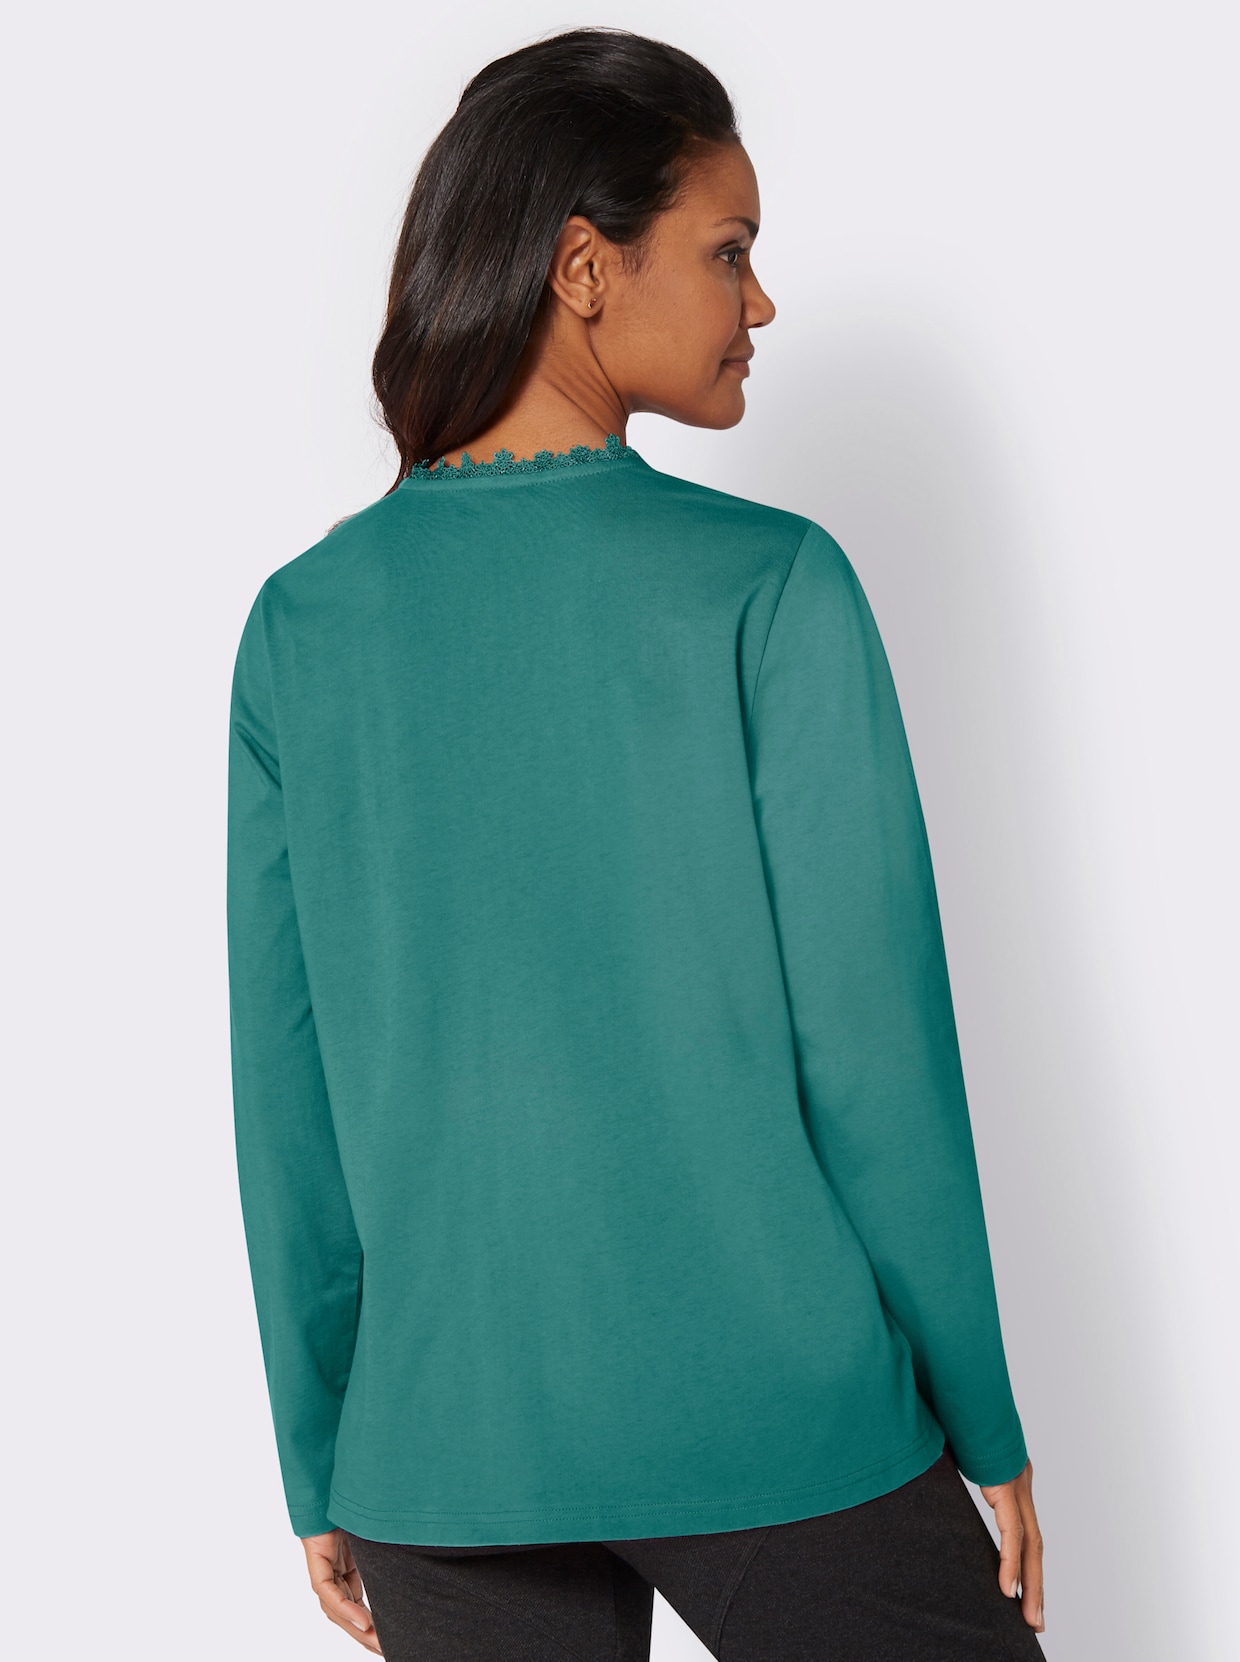 wäschepur Schlafanzug-Shirt - smaragdgrün